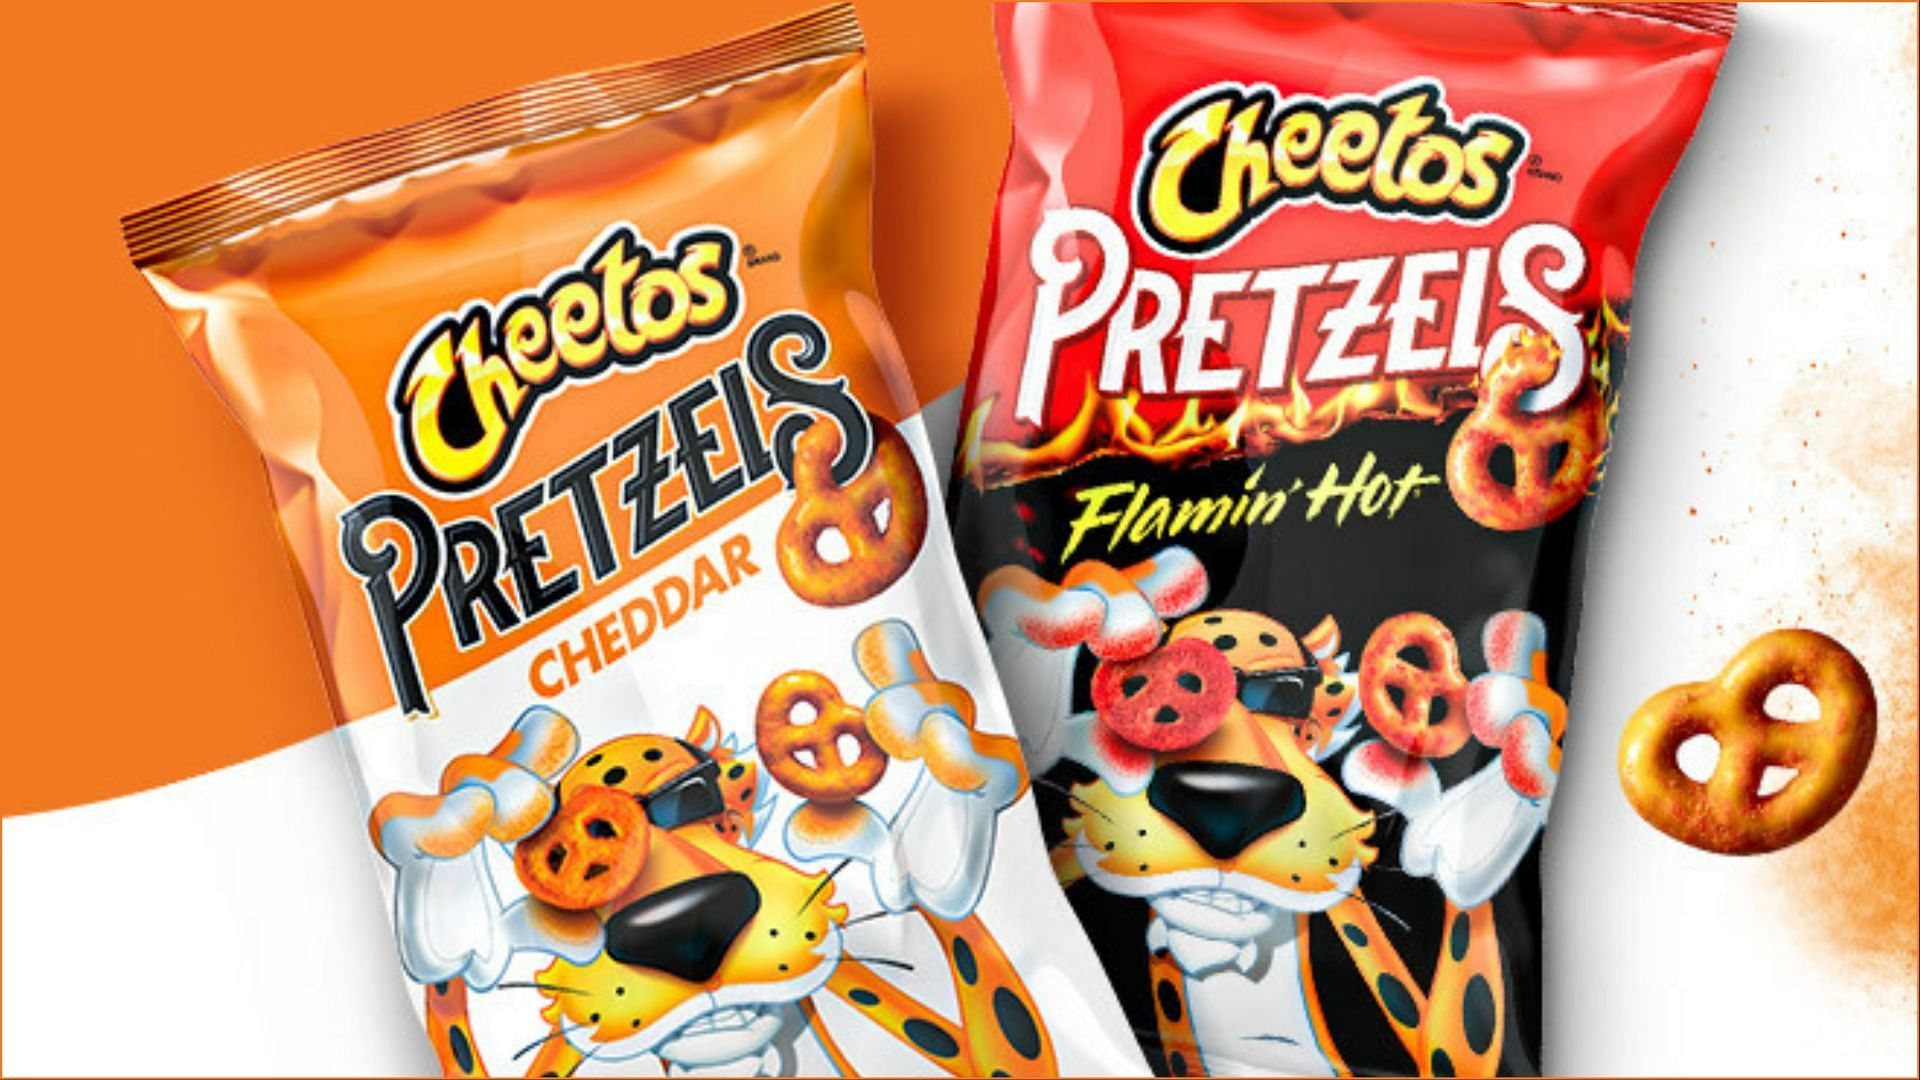 Cheetos introduces a new Cheetos Pretzels snack (Image via Cheetos)